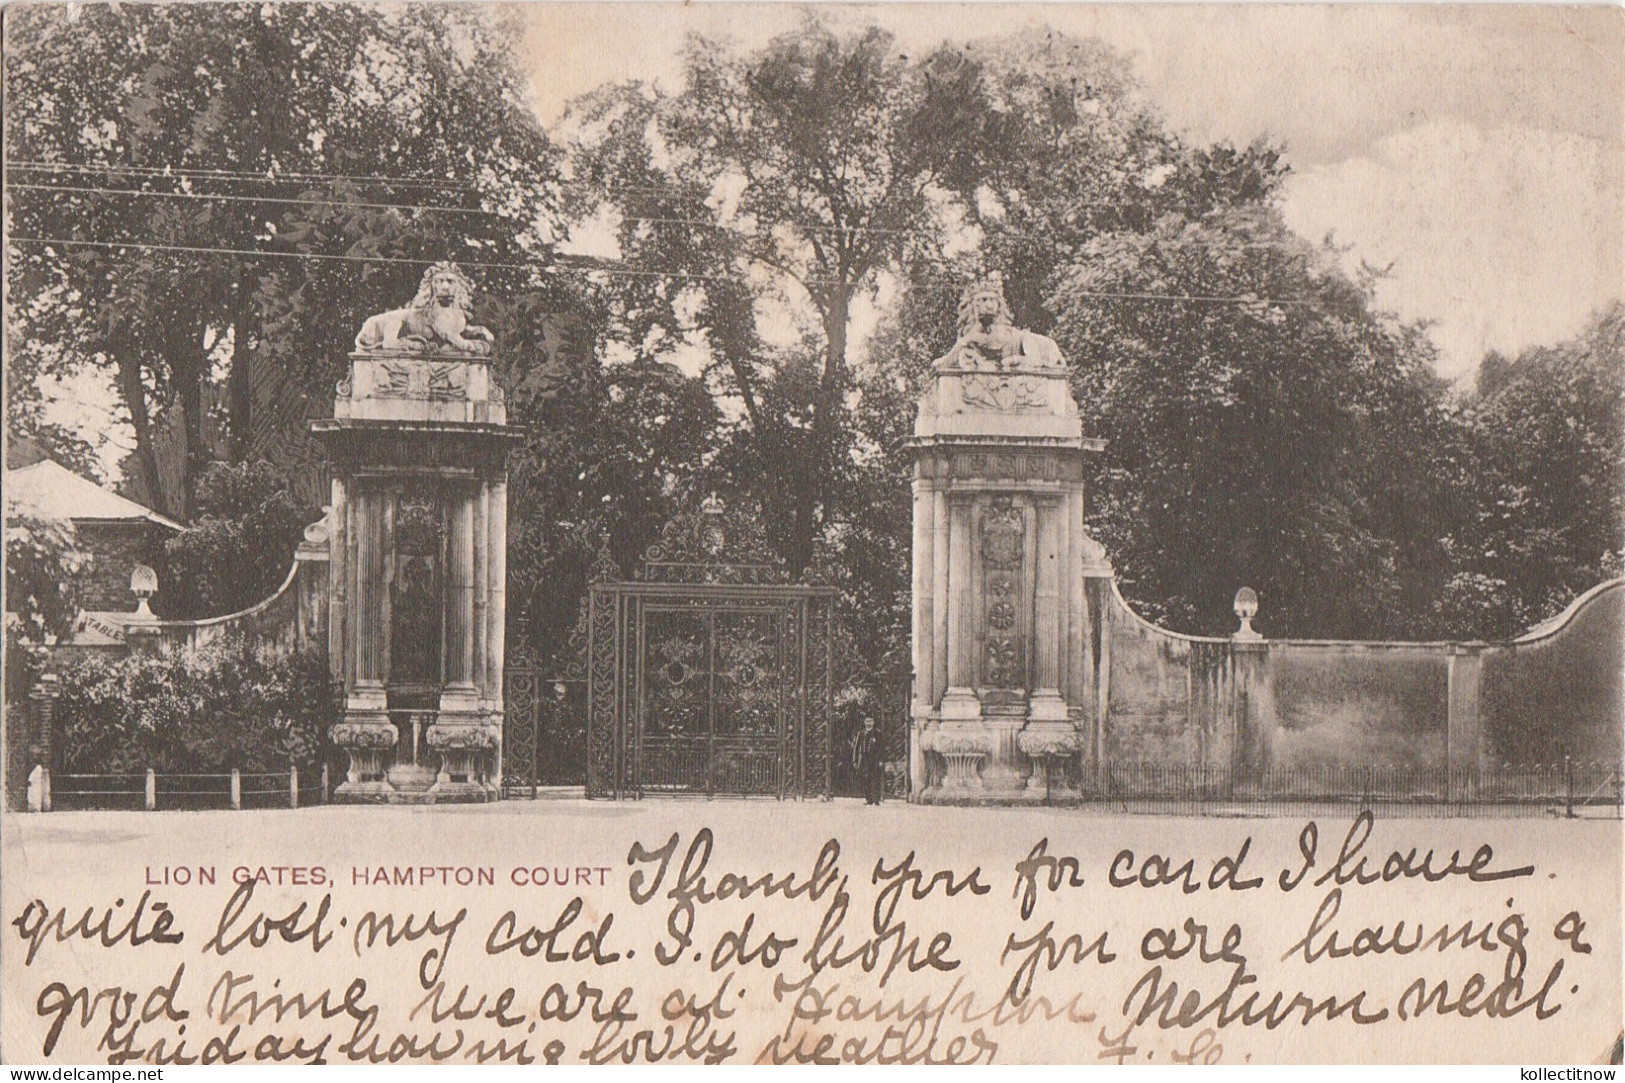 LION GATES - HAMPTON COURT - 1904 - Hampton Court